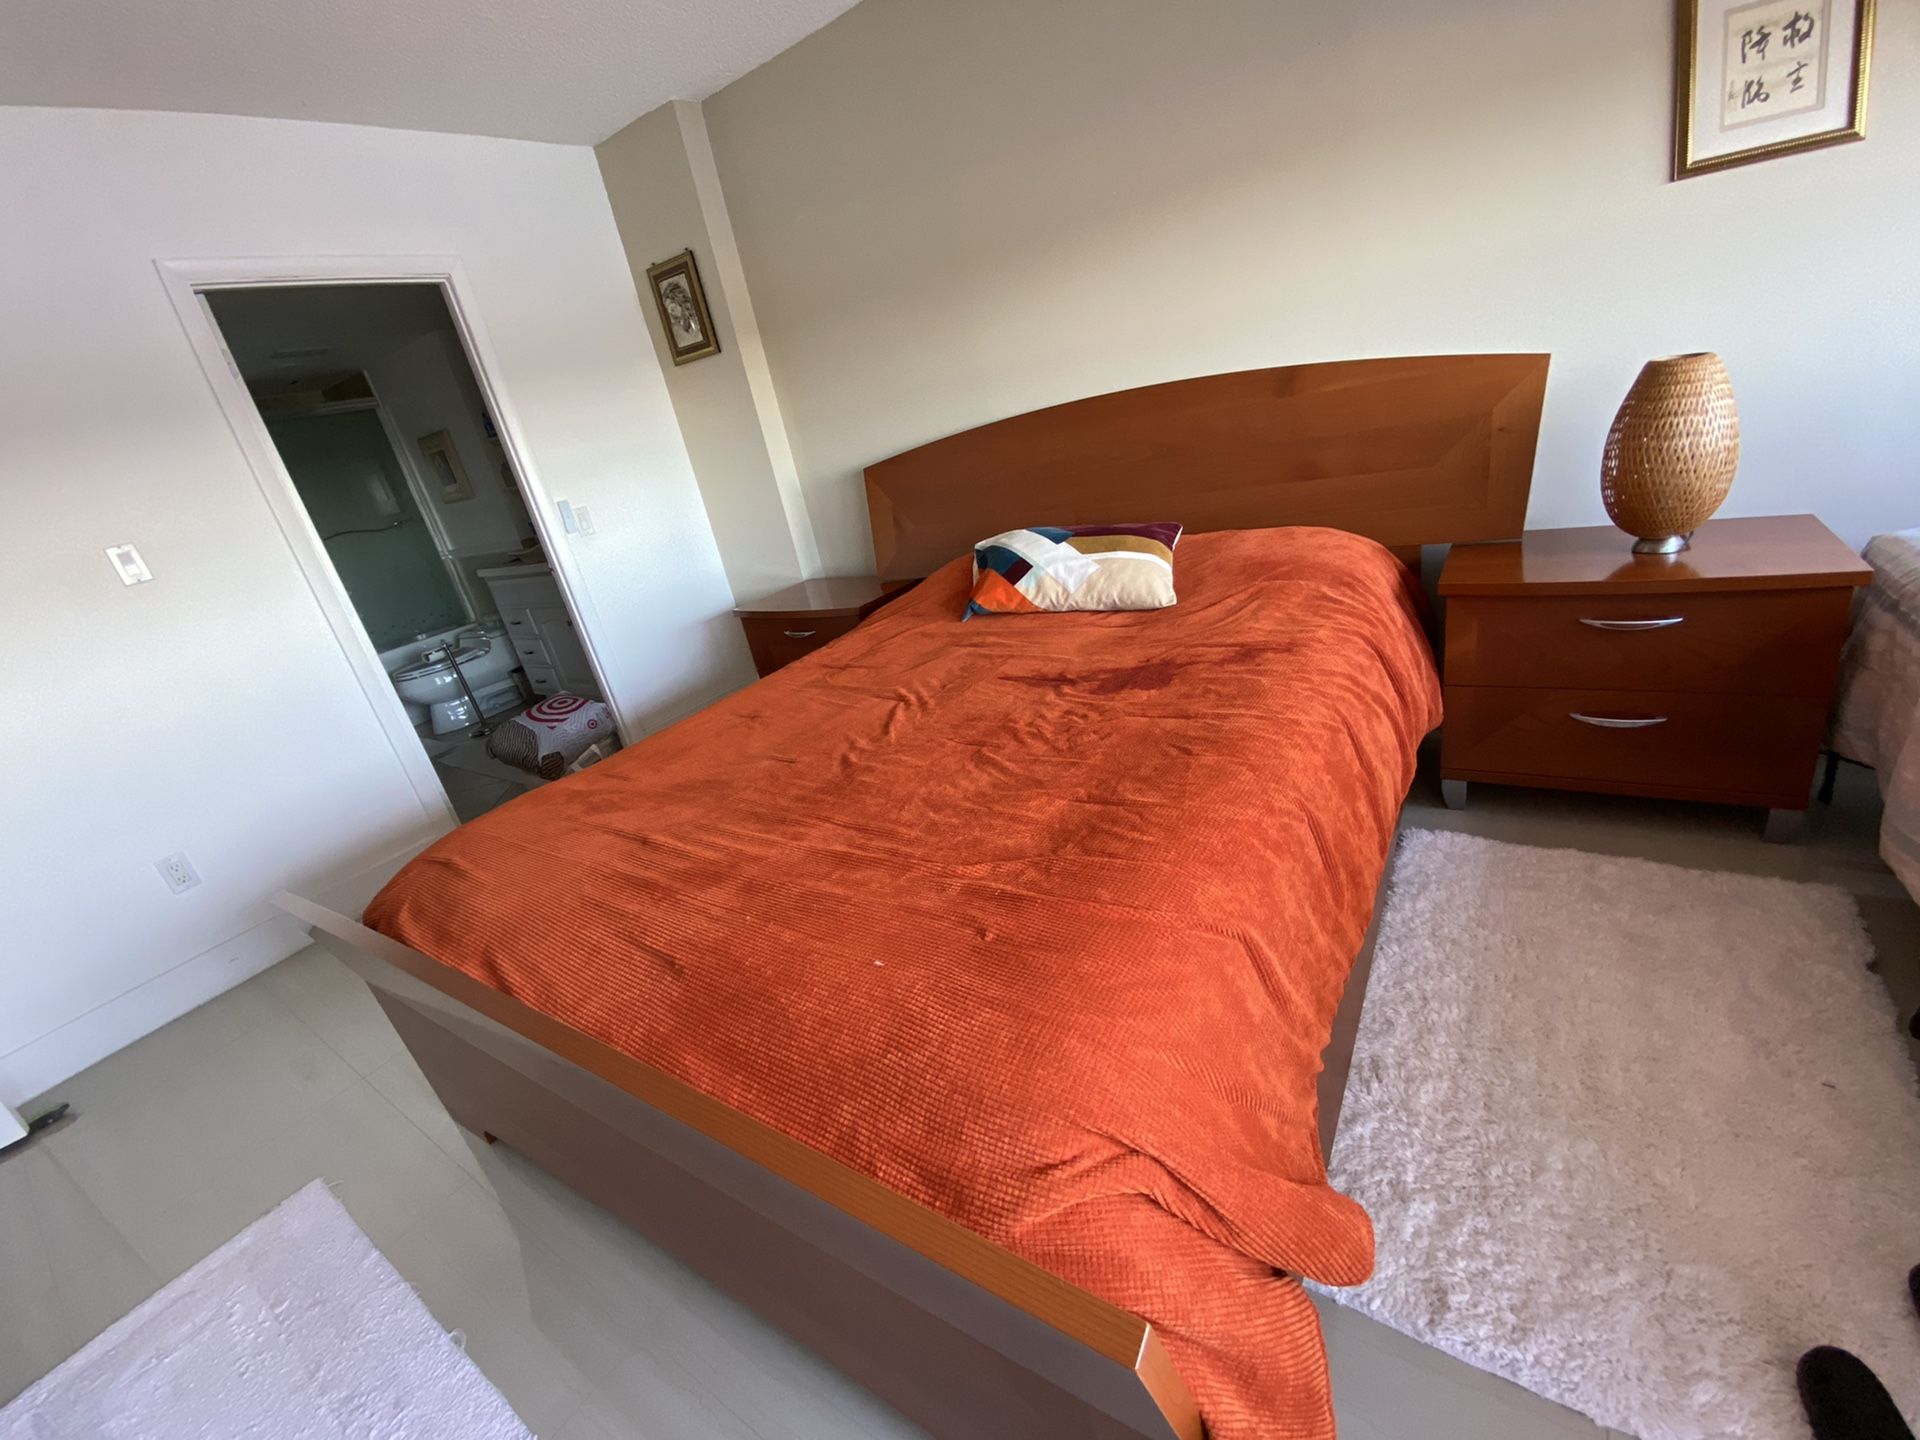 Eldorado Furniture Queen bedroom set (no matress)